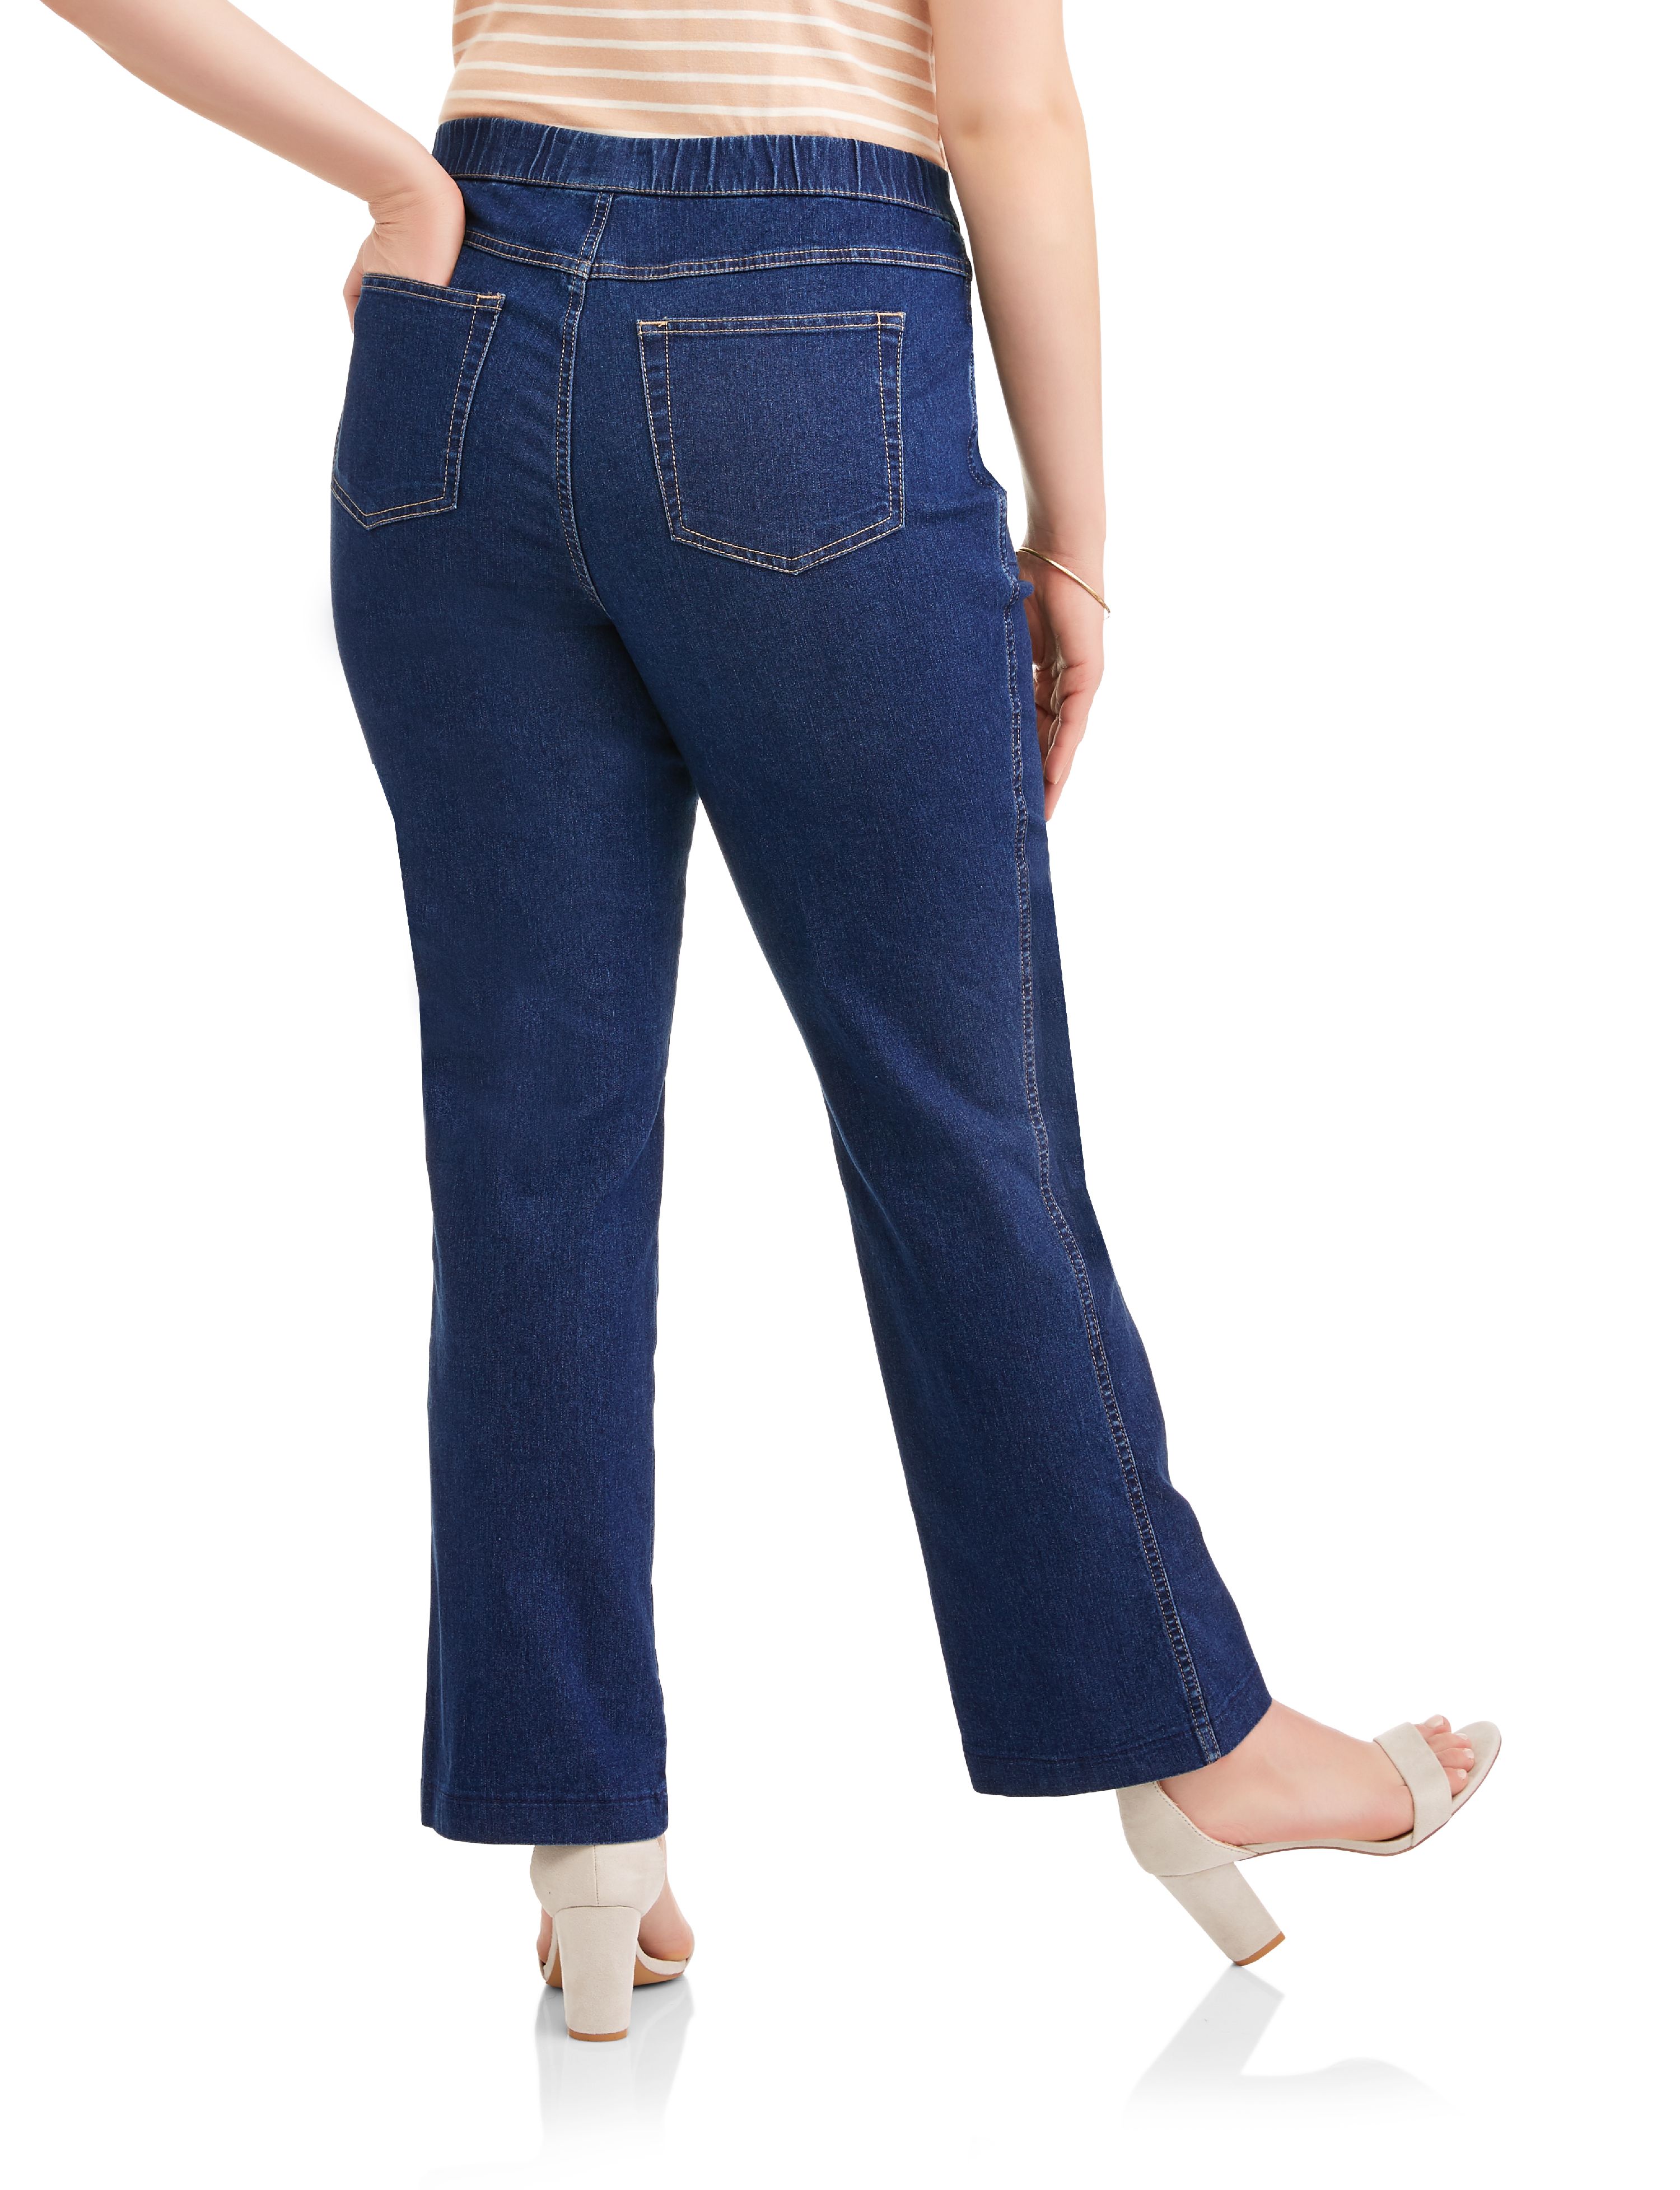 just my size denim jeans